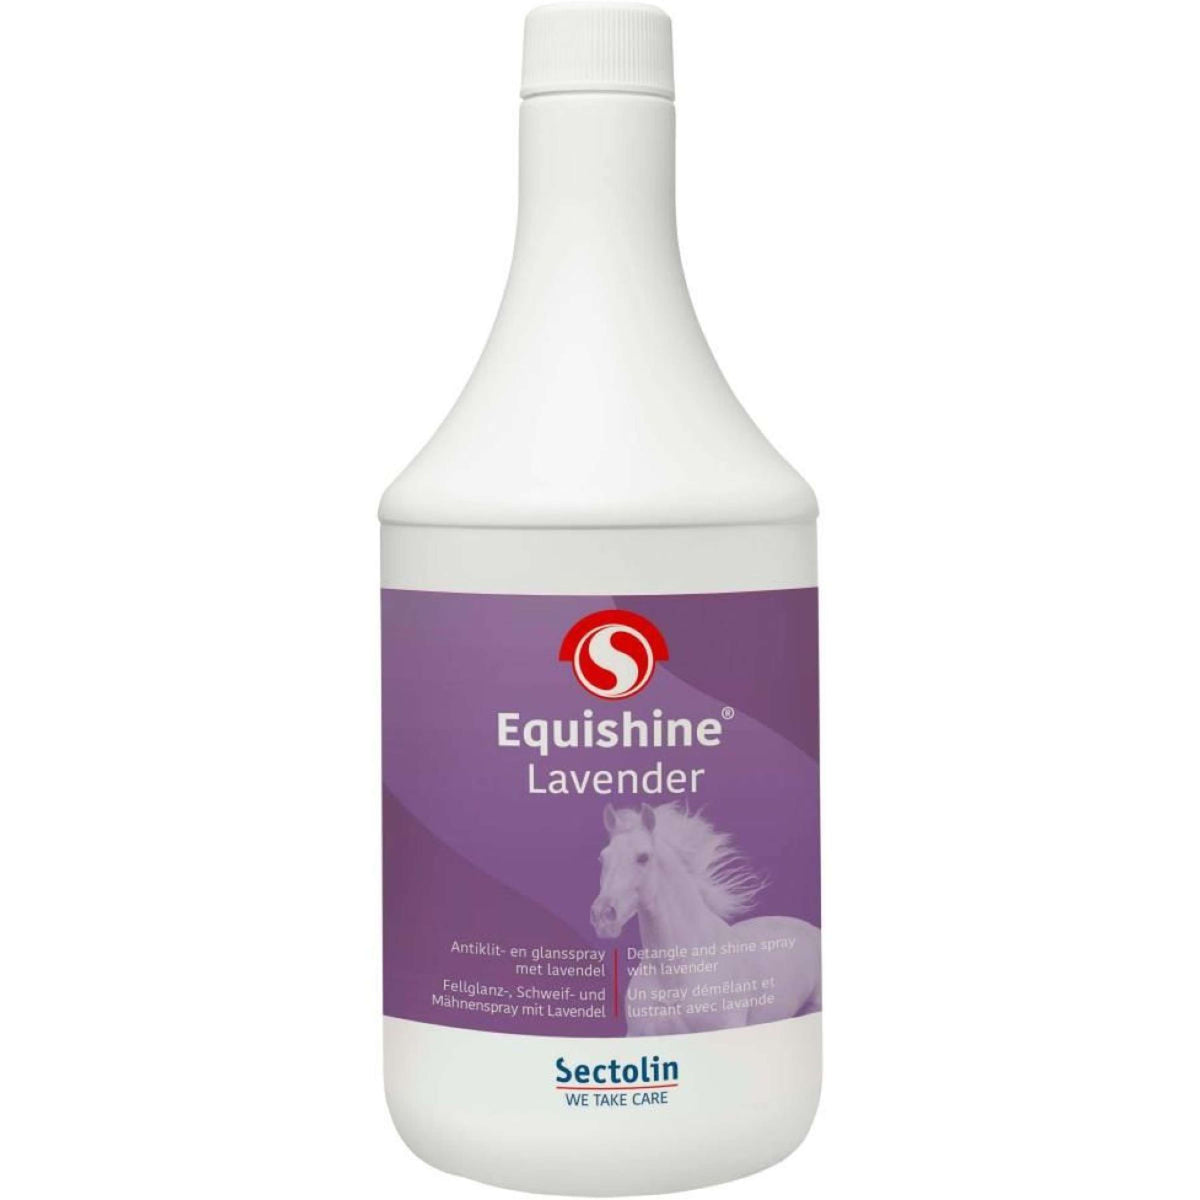 Sectolin EquiShine Lavendel